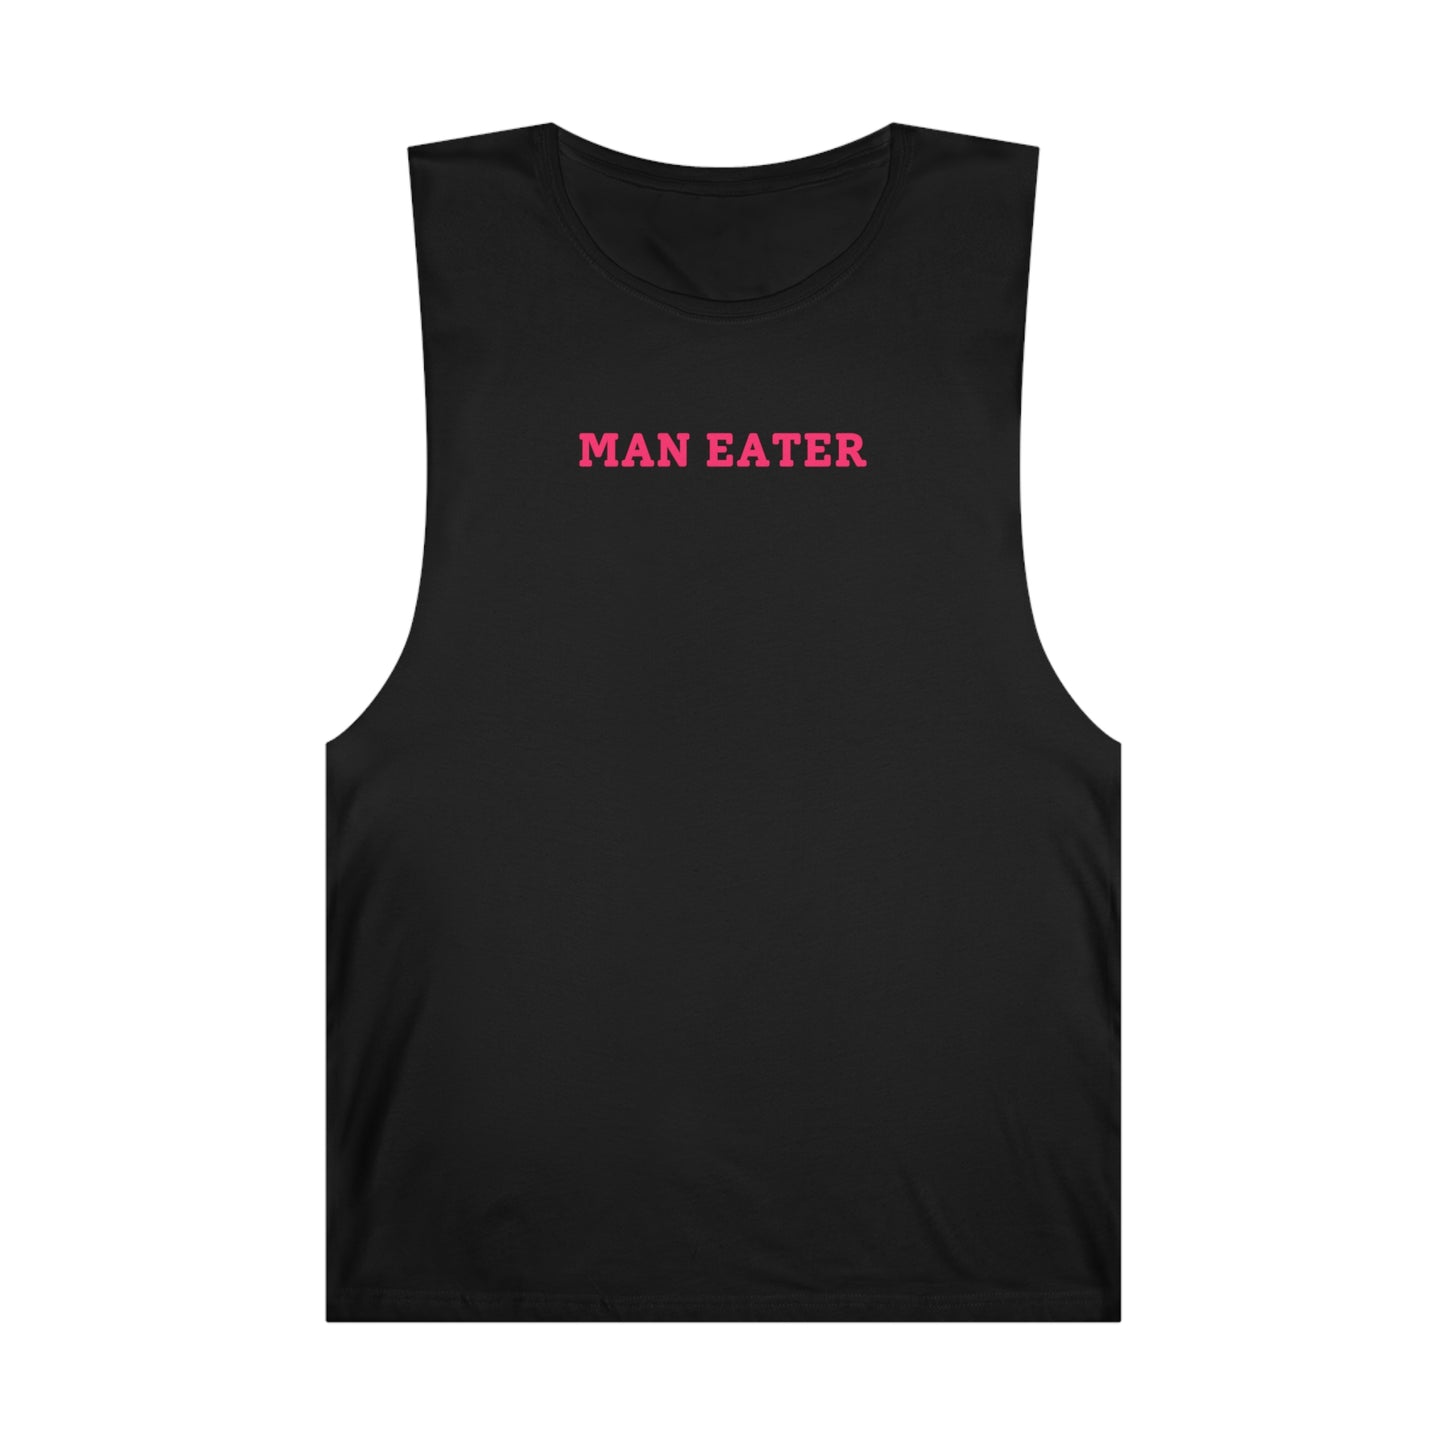 Man Eater - Unisex Gym Tank